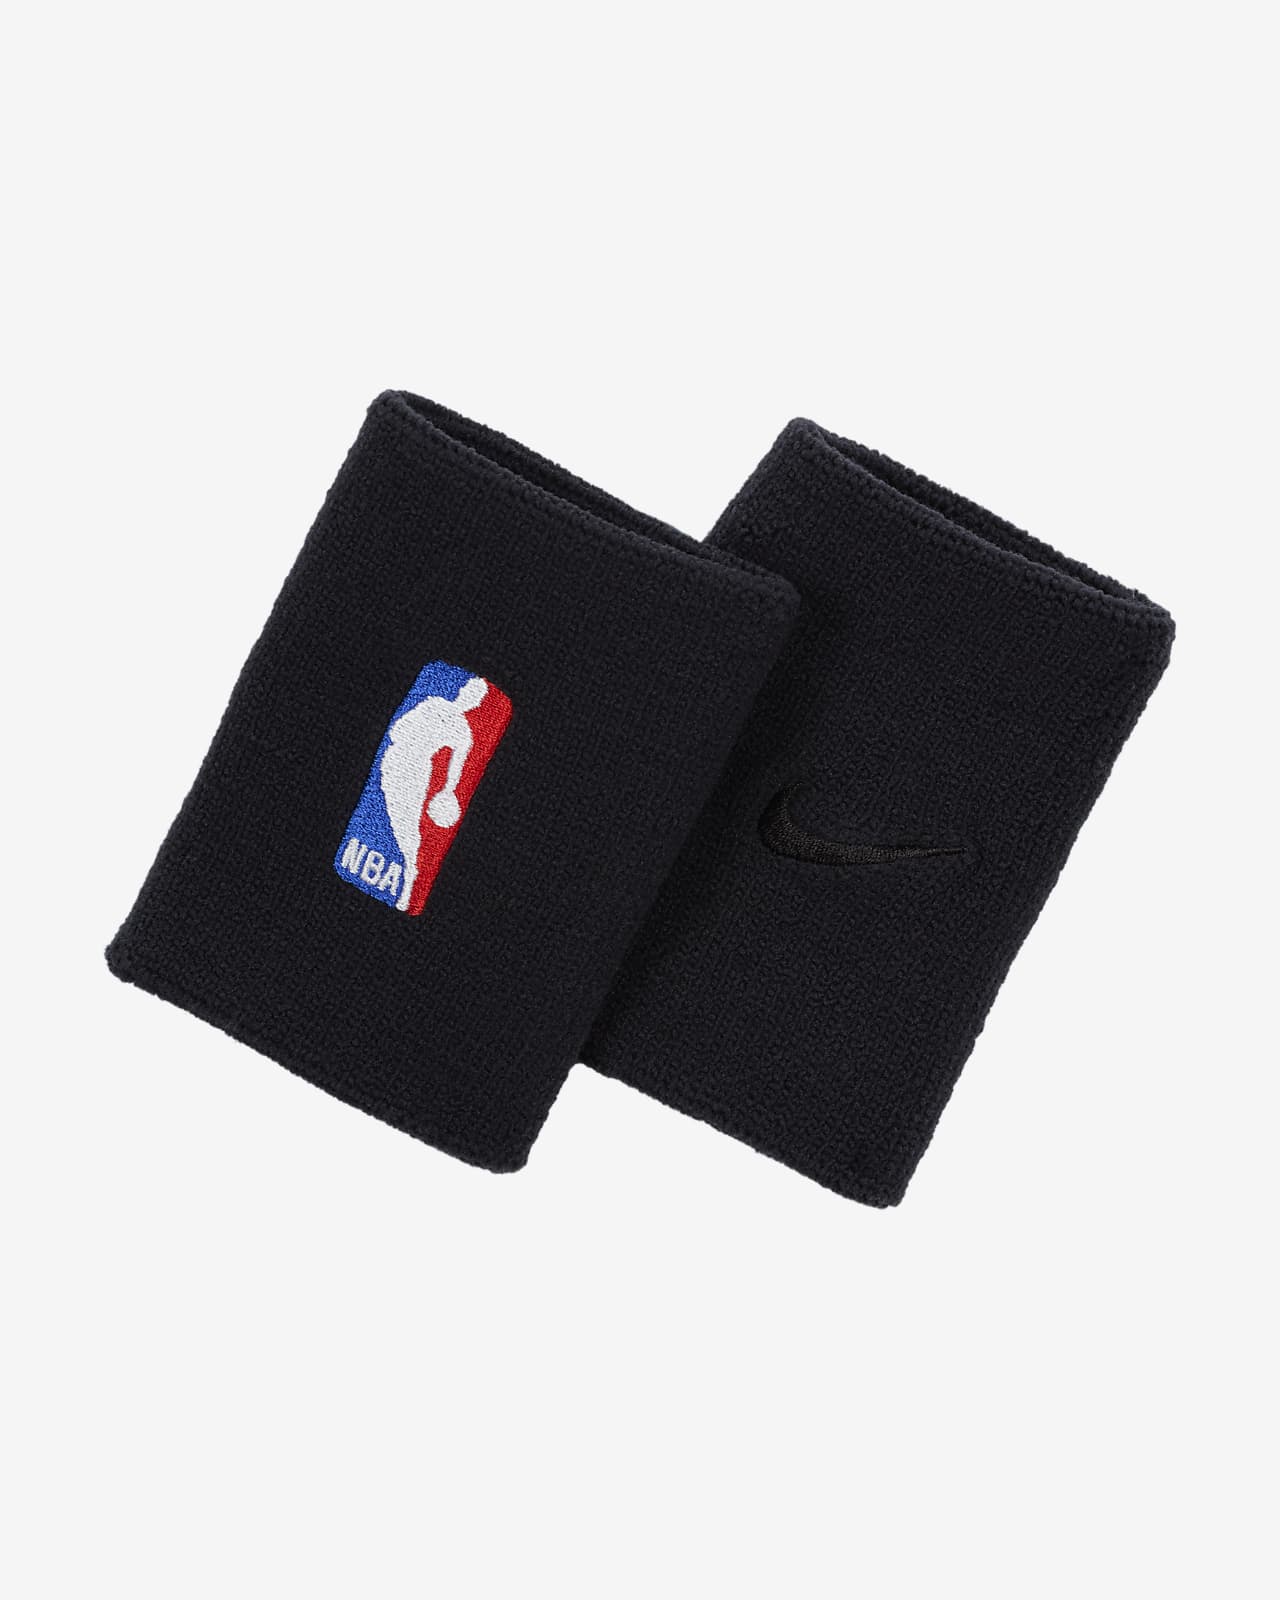 NBA Nike Dri-FIT Basketball Wristbands (1 Pair)